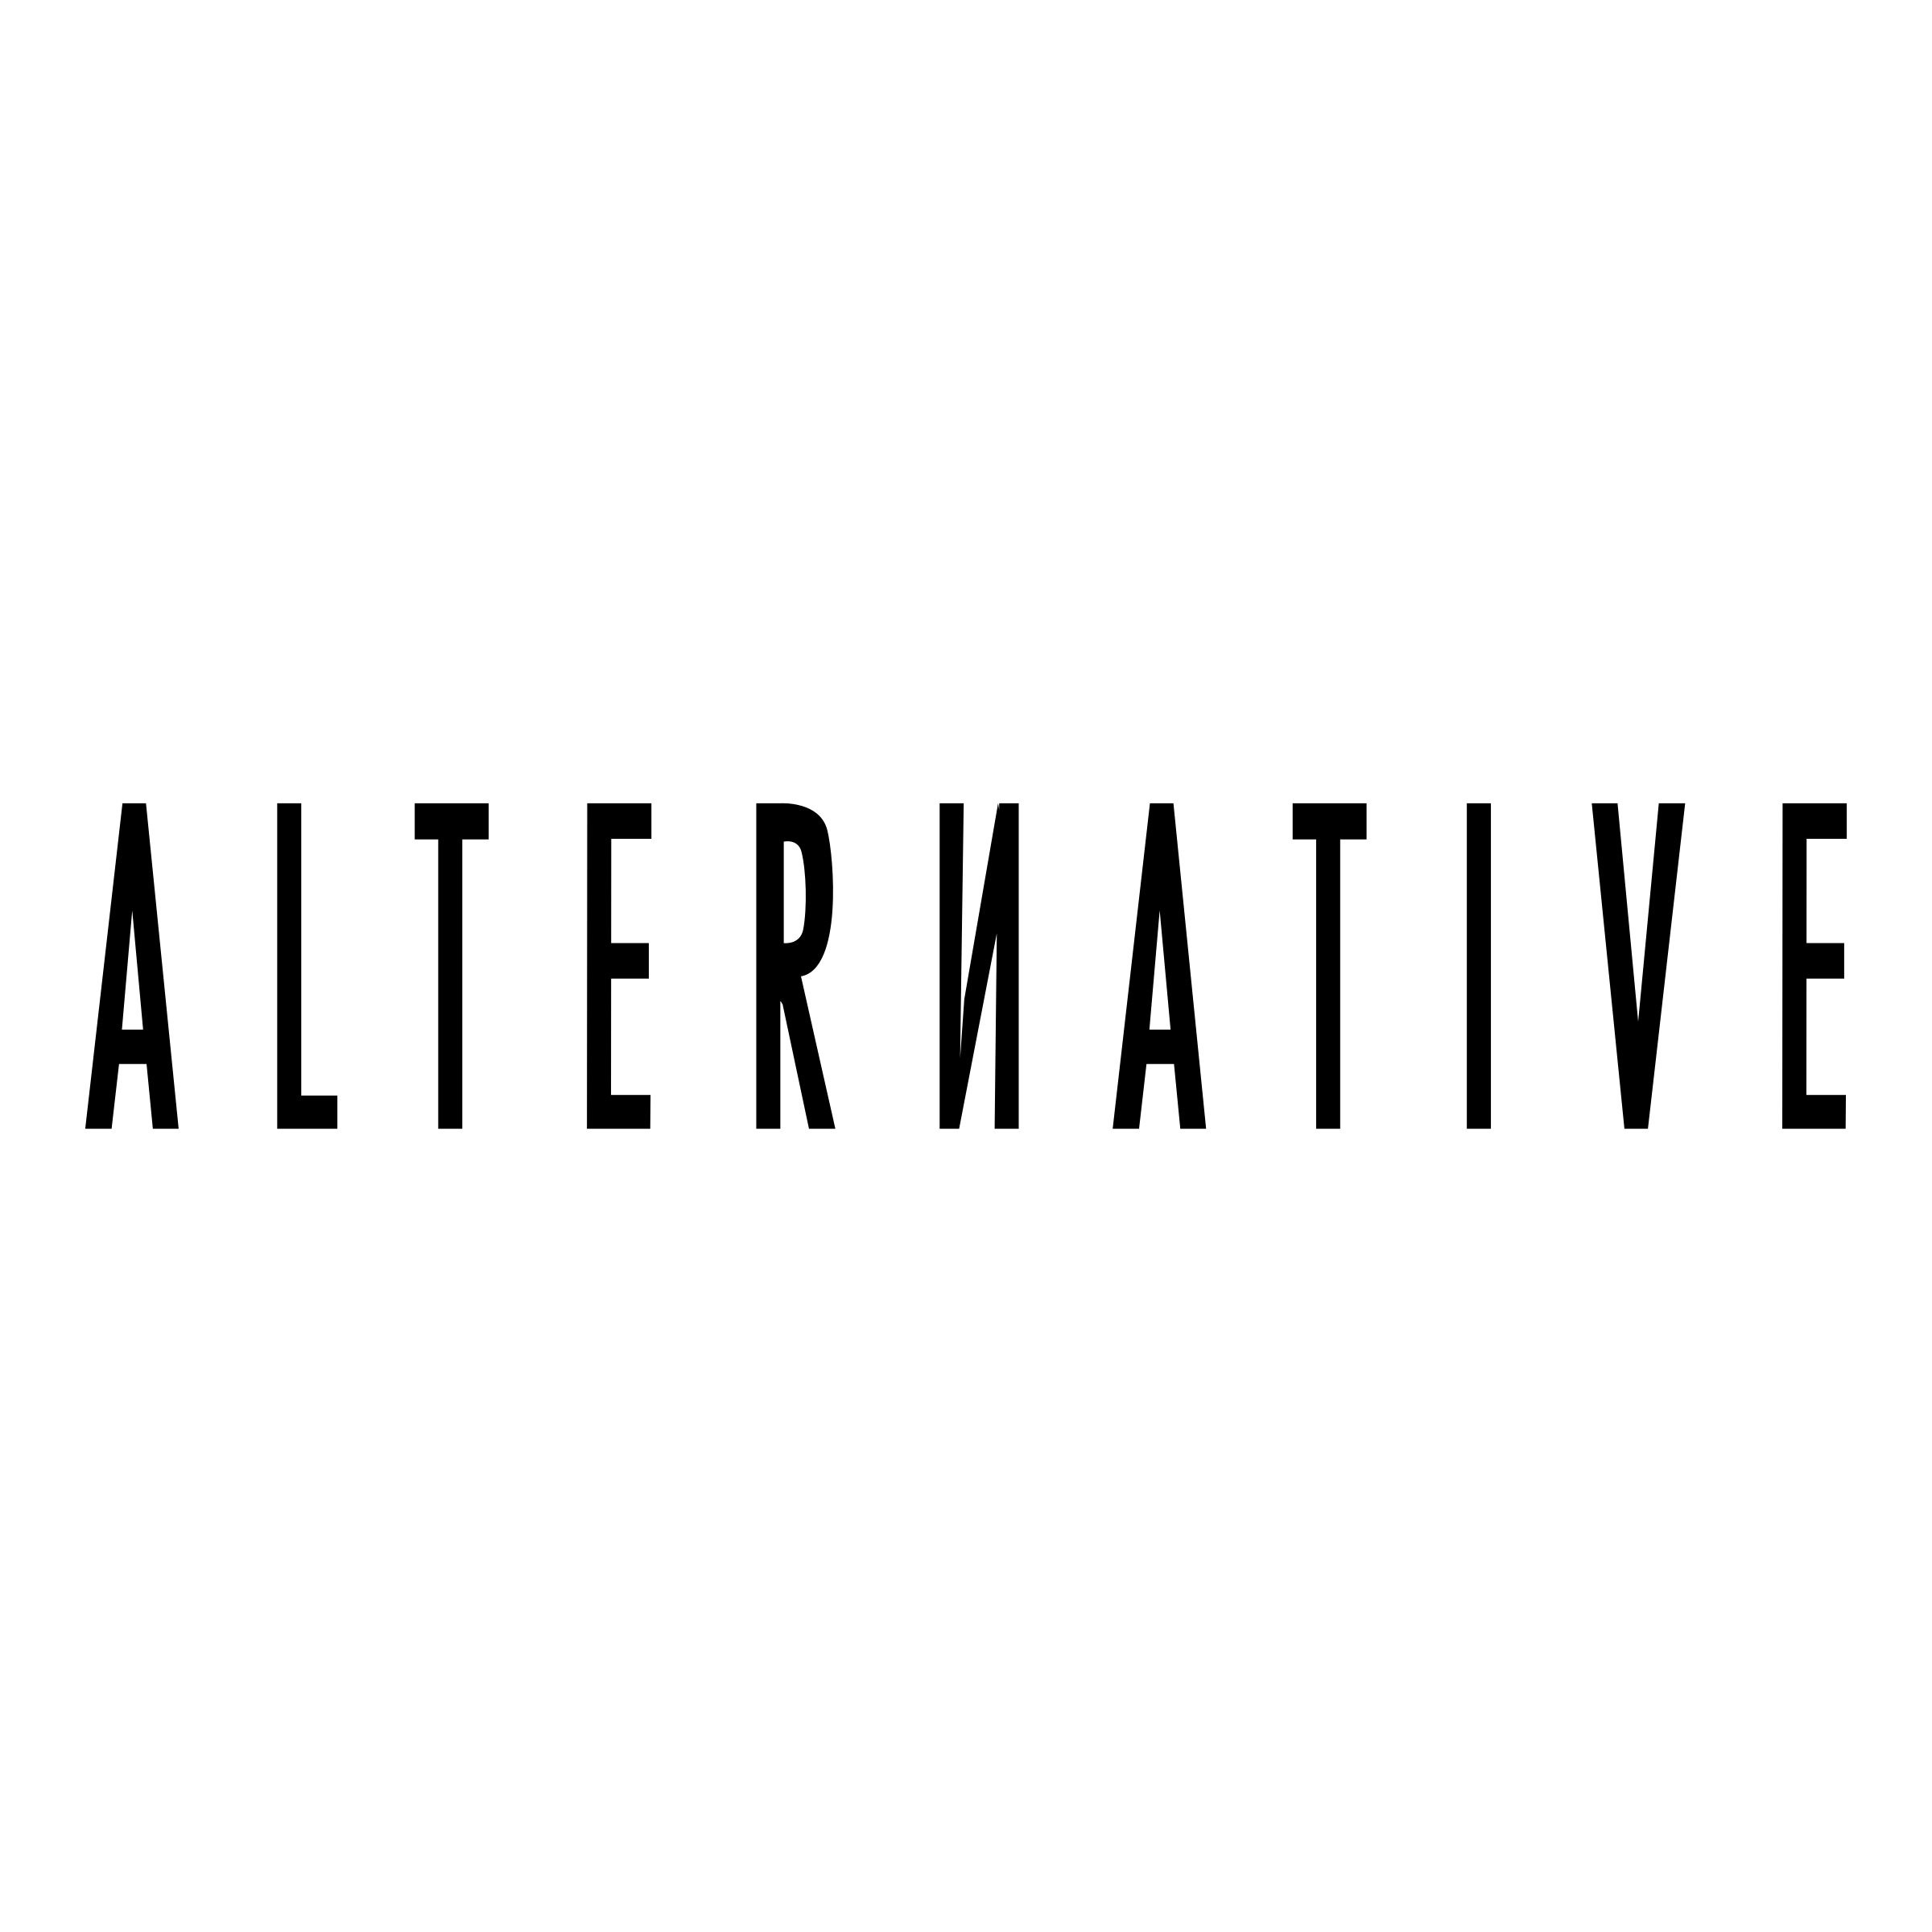 Alternative Logo - Alternative Logo PNG Transparent & SVG Vector - Freebie Supply